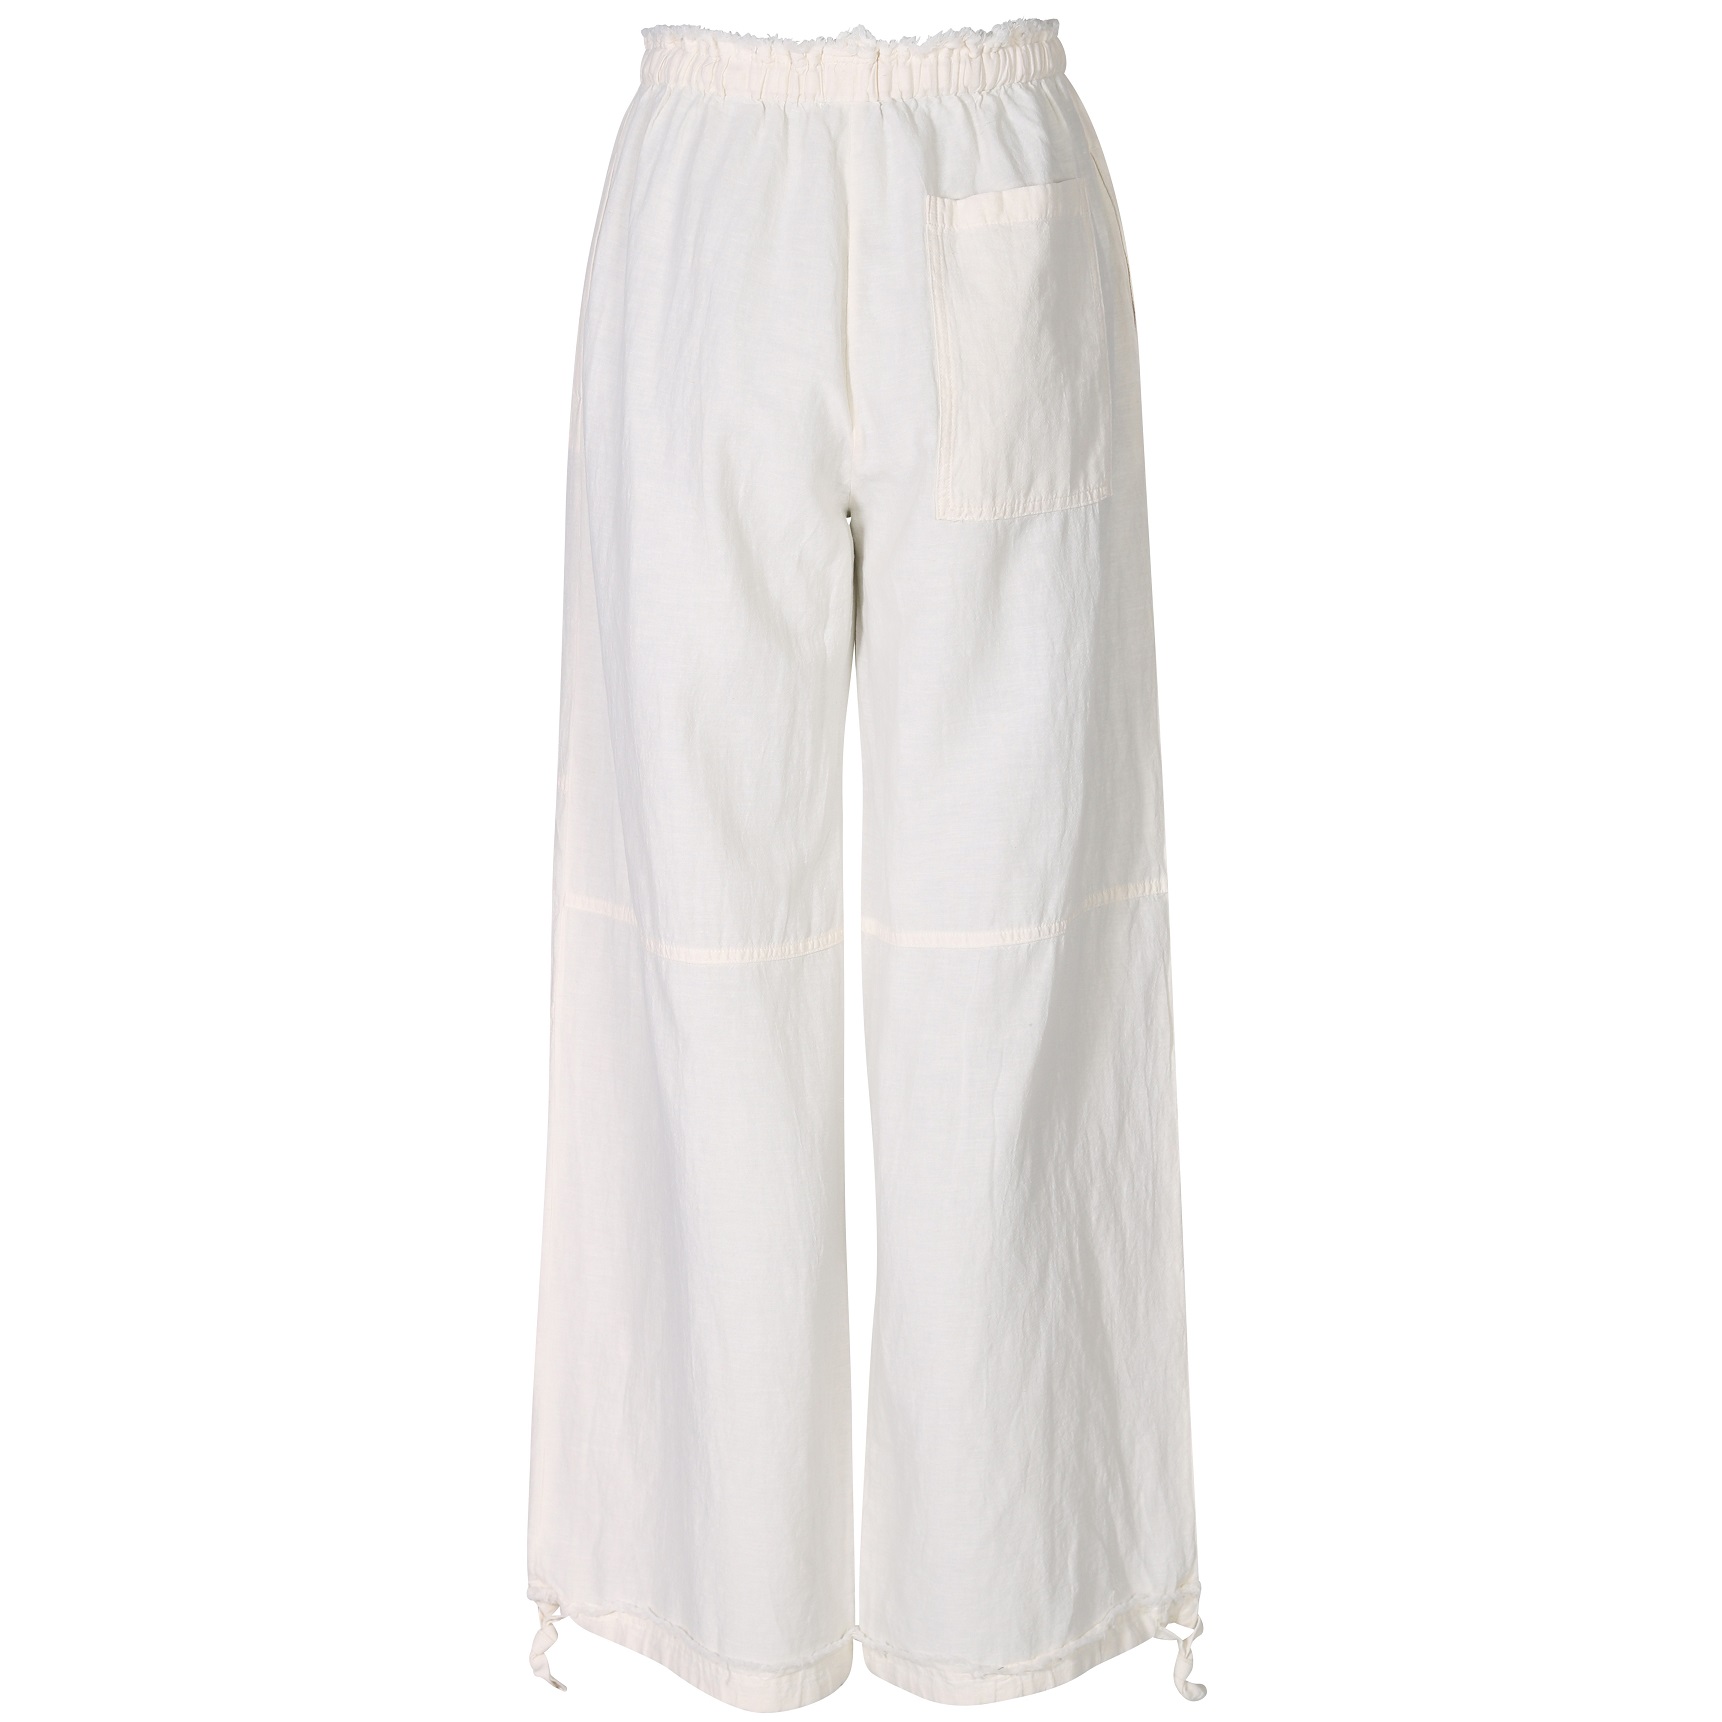 ACNE STUDIOS Cotton/Linen Pant in Warm White 36